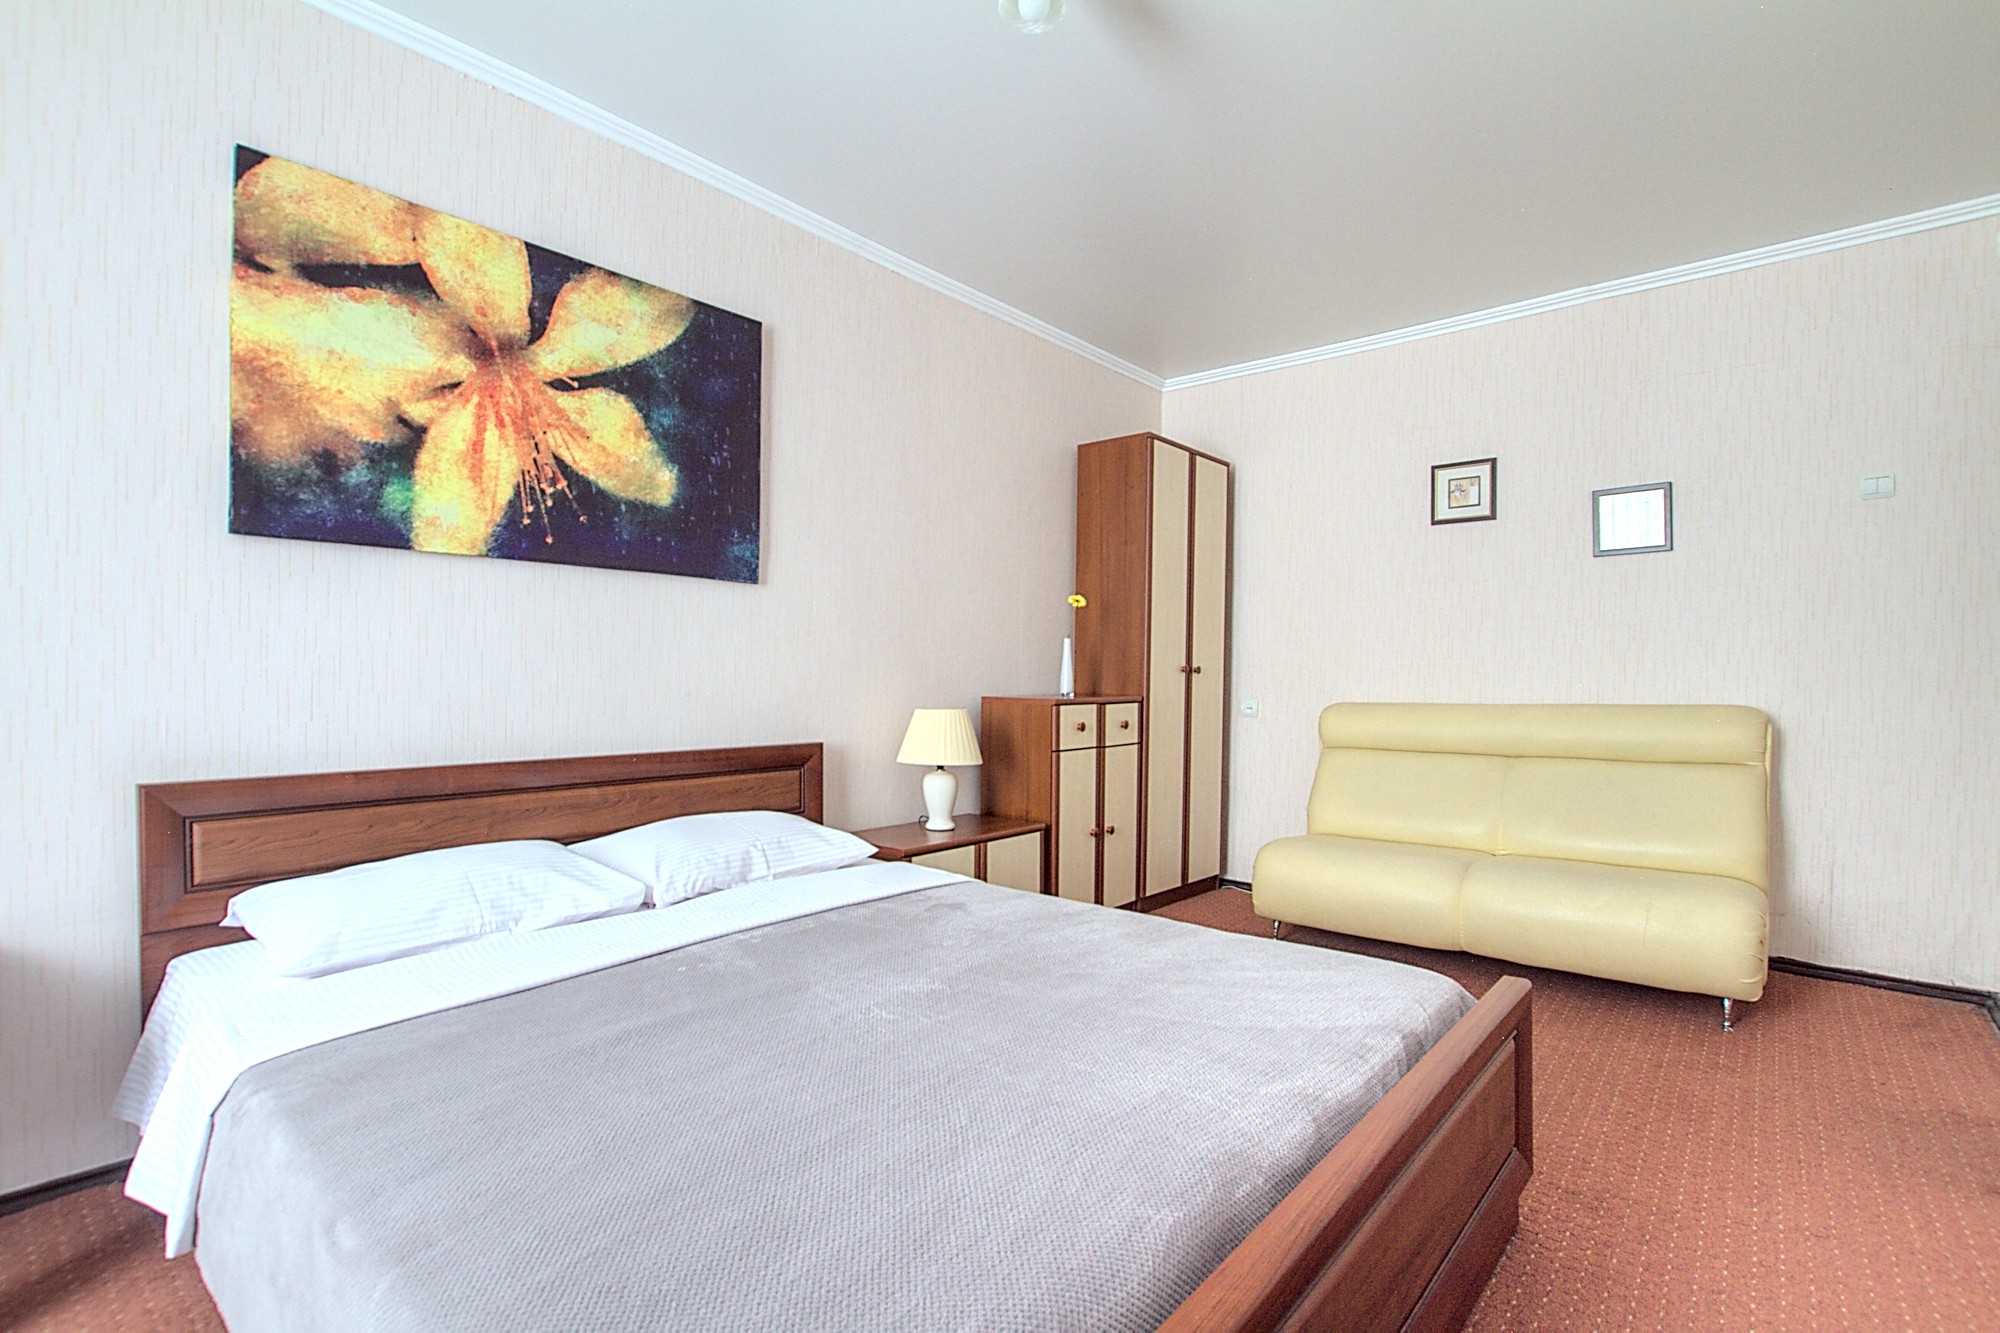 Boulevard Apartment это квартира в аренду в Кишиневе имеющая 1 комната в аренду в Кишиневе - Chisinau, Moldova